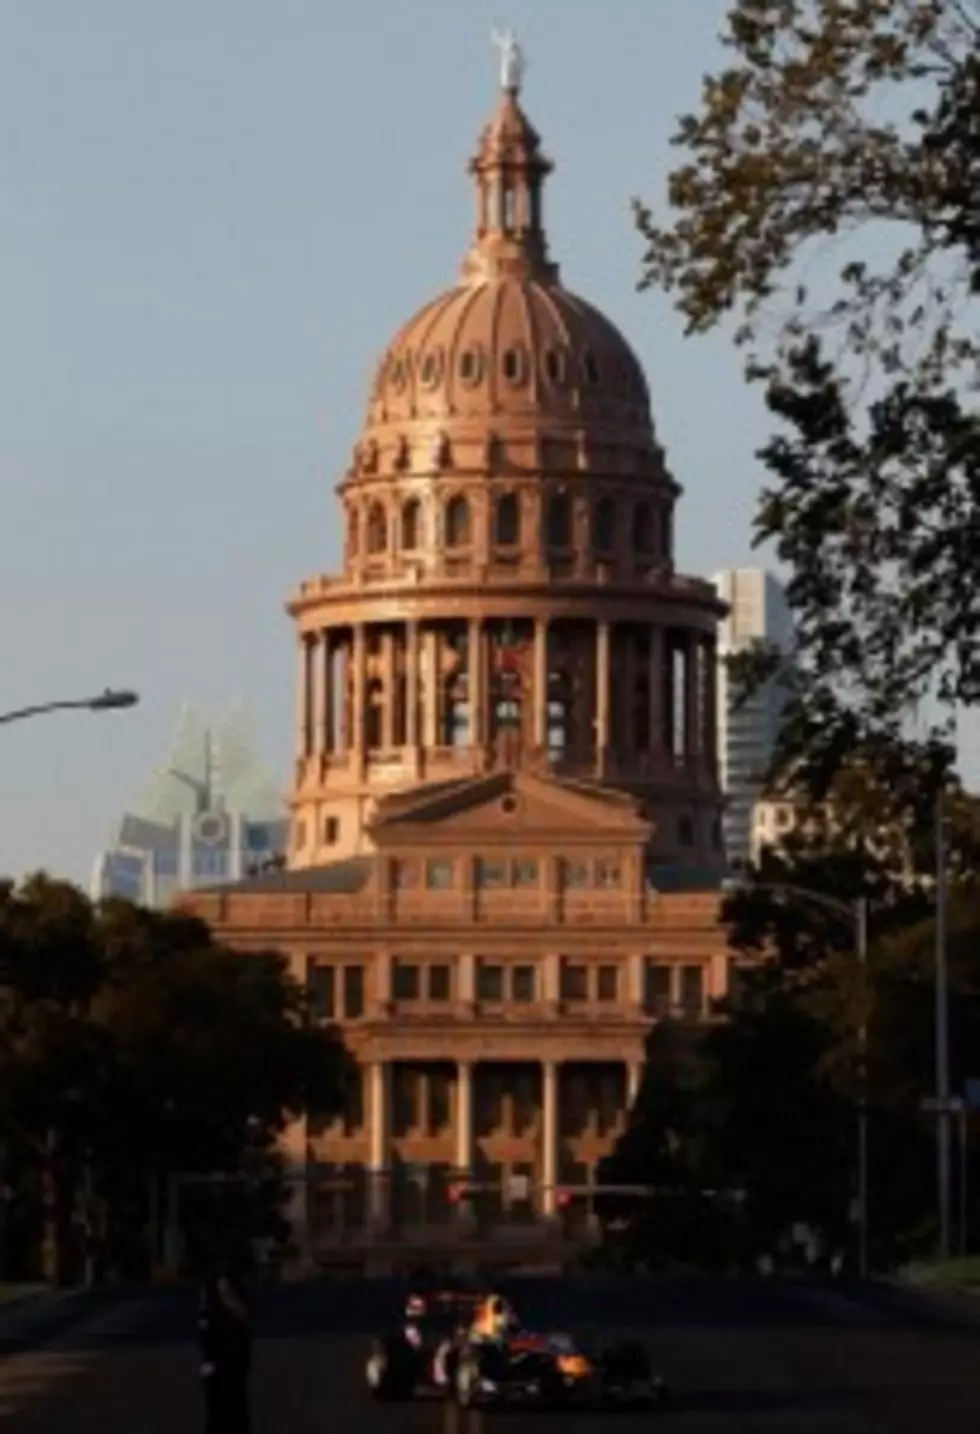 State Senators Again Discuss Bill Banning Sanctuary Cities